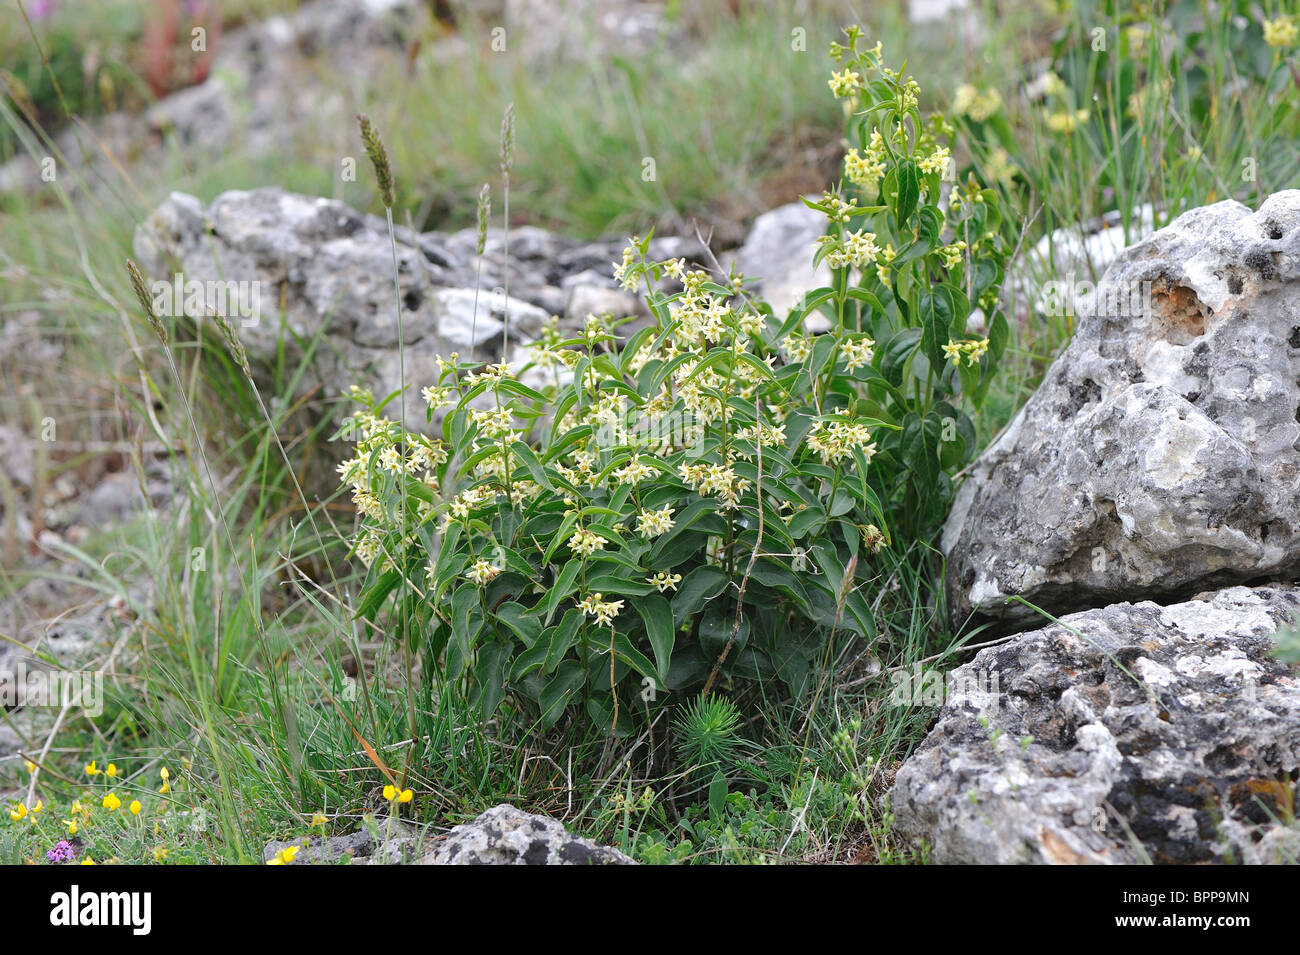 White swallow-wort (Vincetoxicum officinale - Vincetoxicum hirundinaria) flowering at spring - Cevennes - France Stock Photo